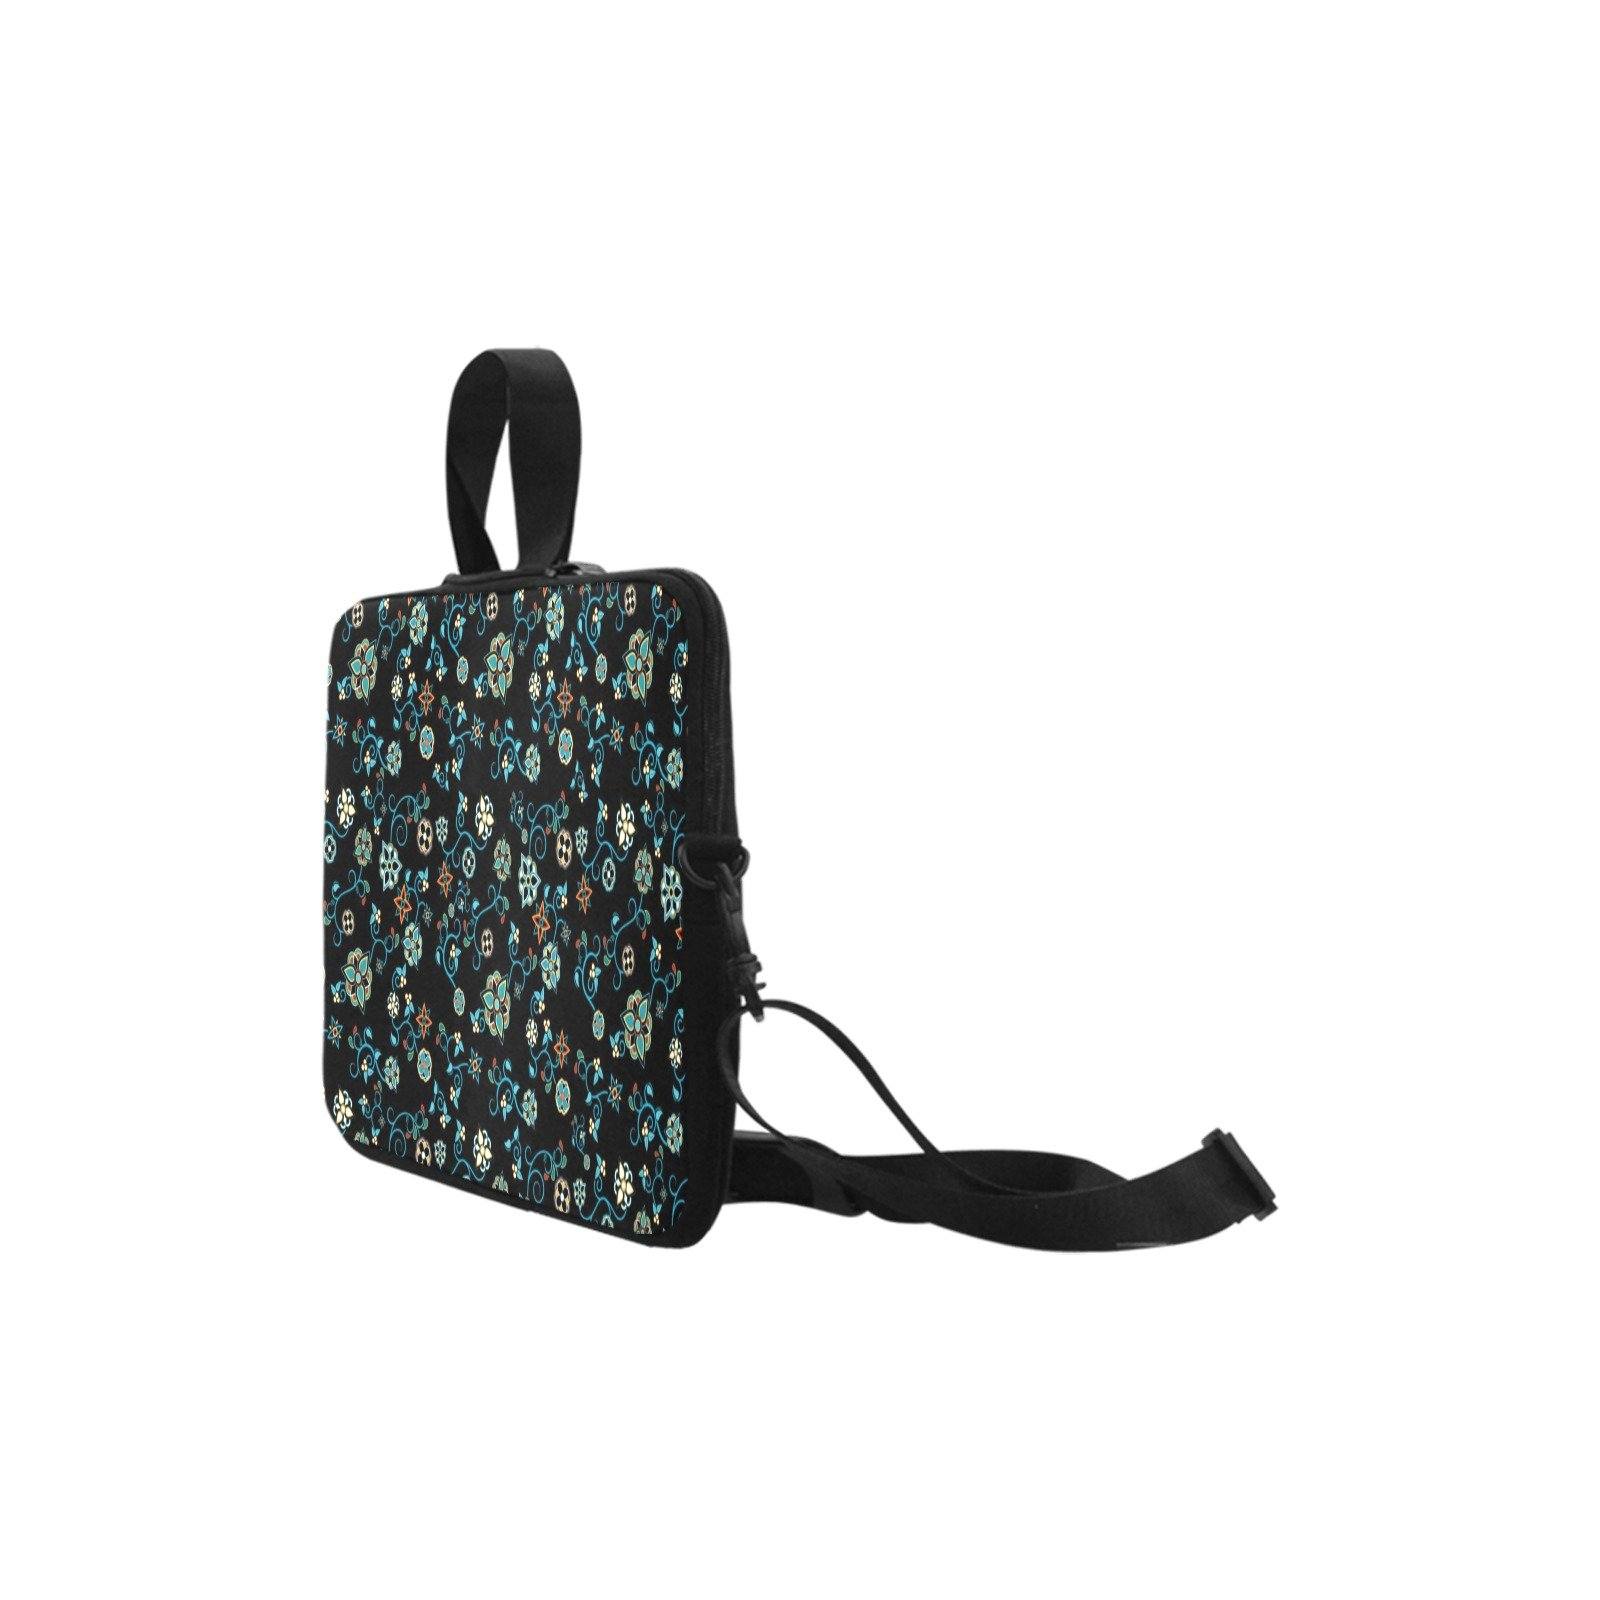 Ocean Bloom Laptop Handbags 15" Laptop Handbags 15" e-joyer 